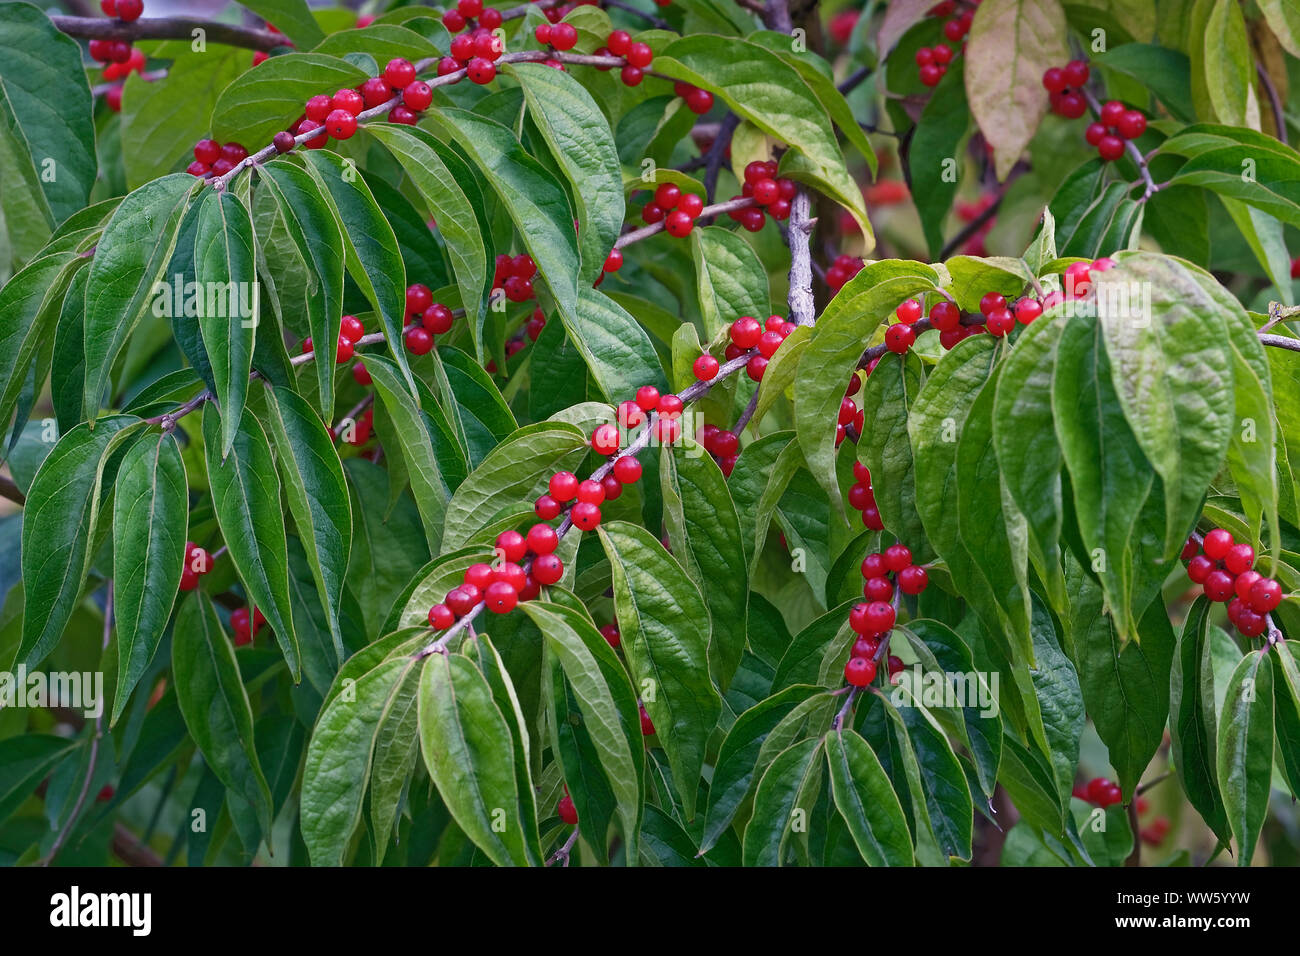 Amur honeysuckle, Lonicera maackii, Mass of small red berries growing outdoor. Stock Photo